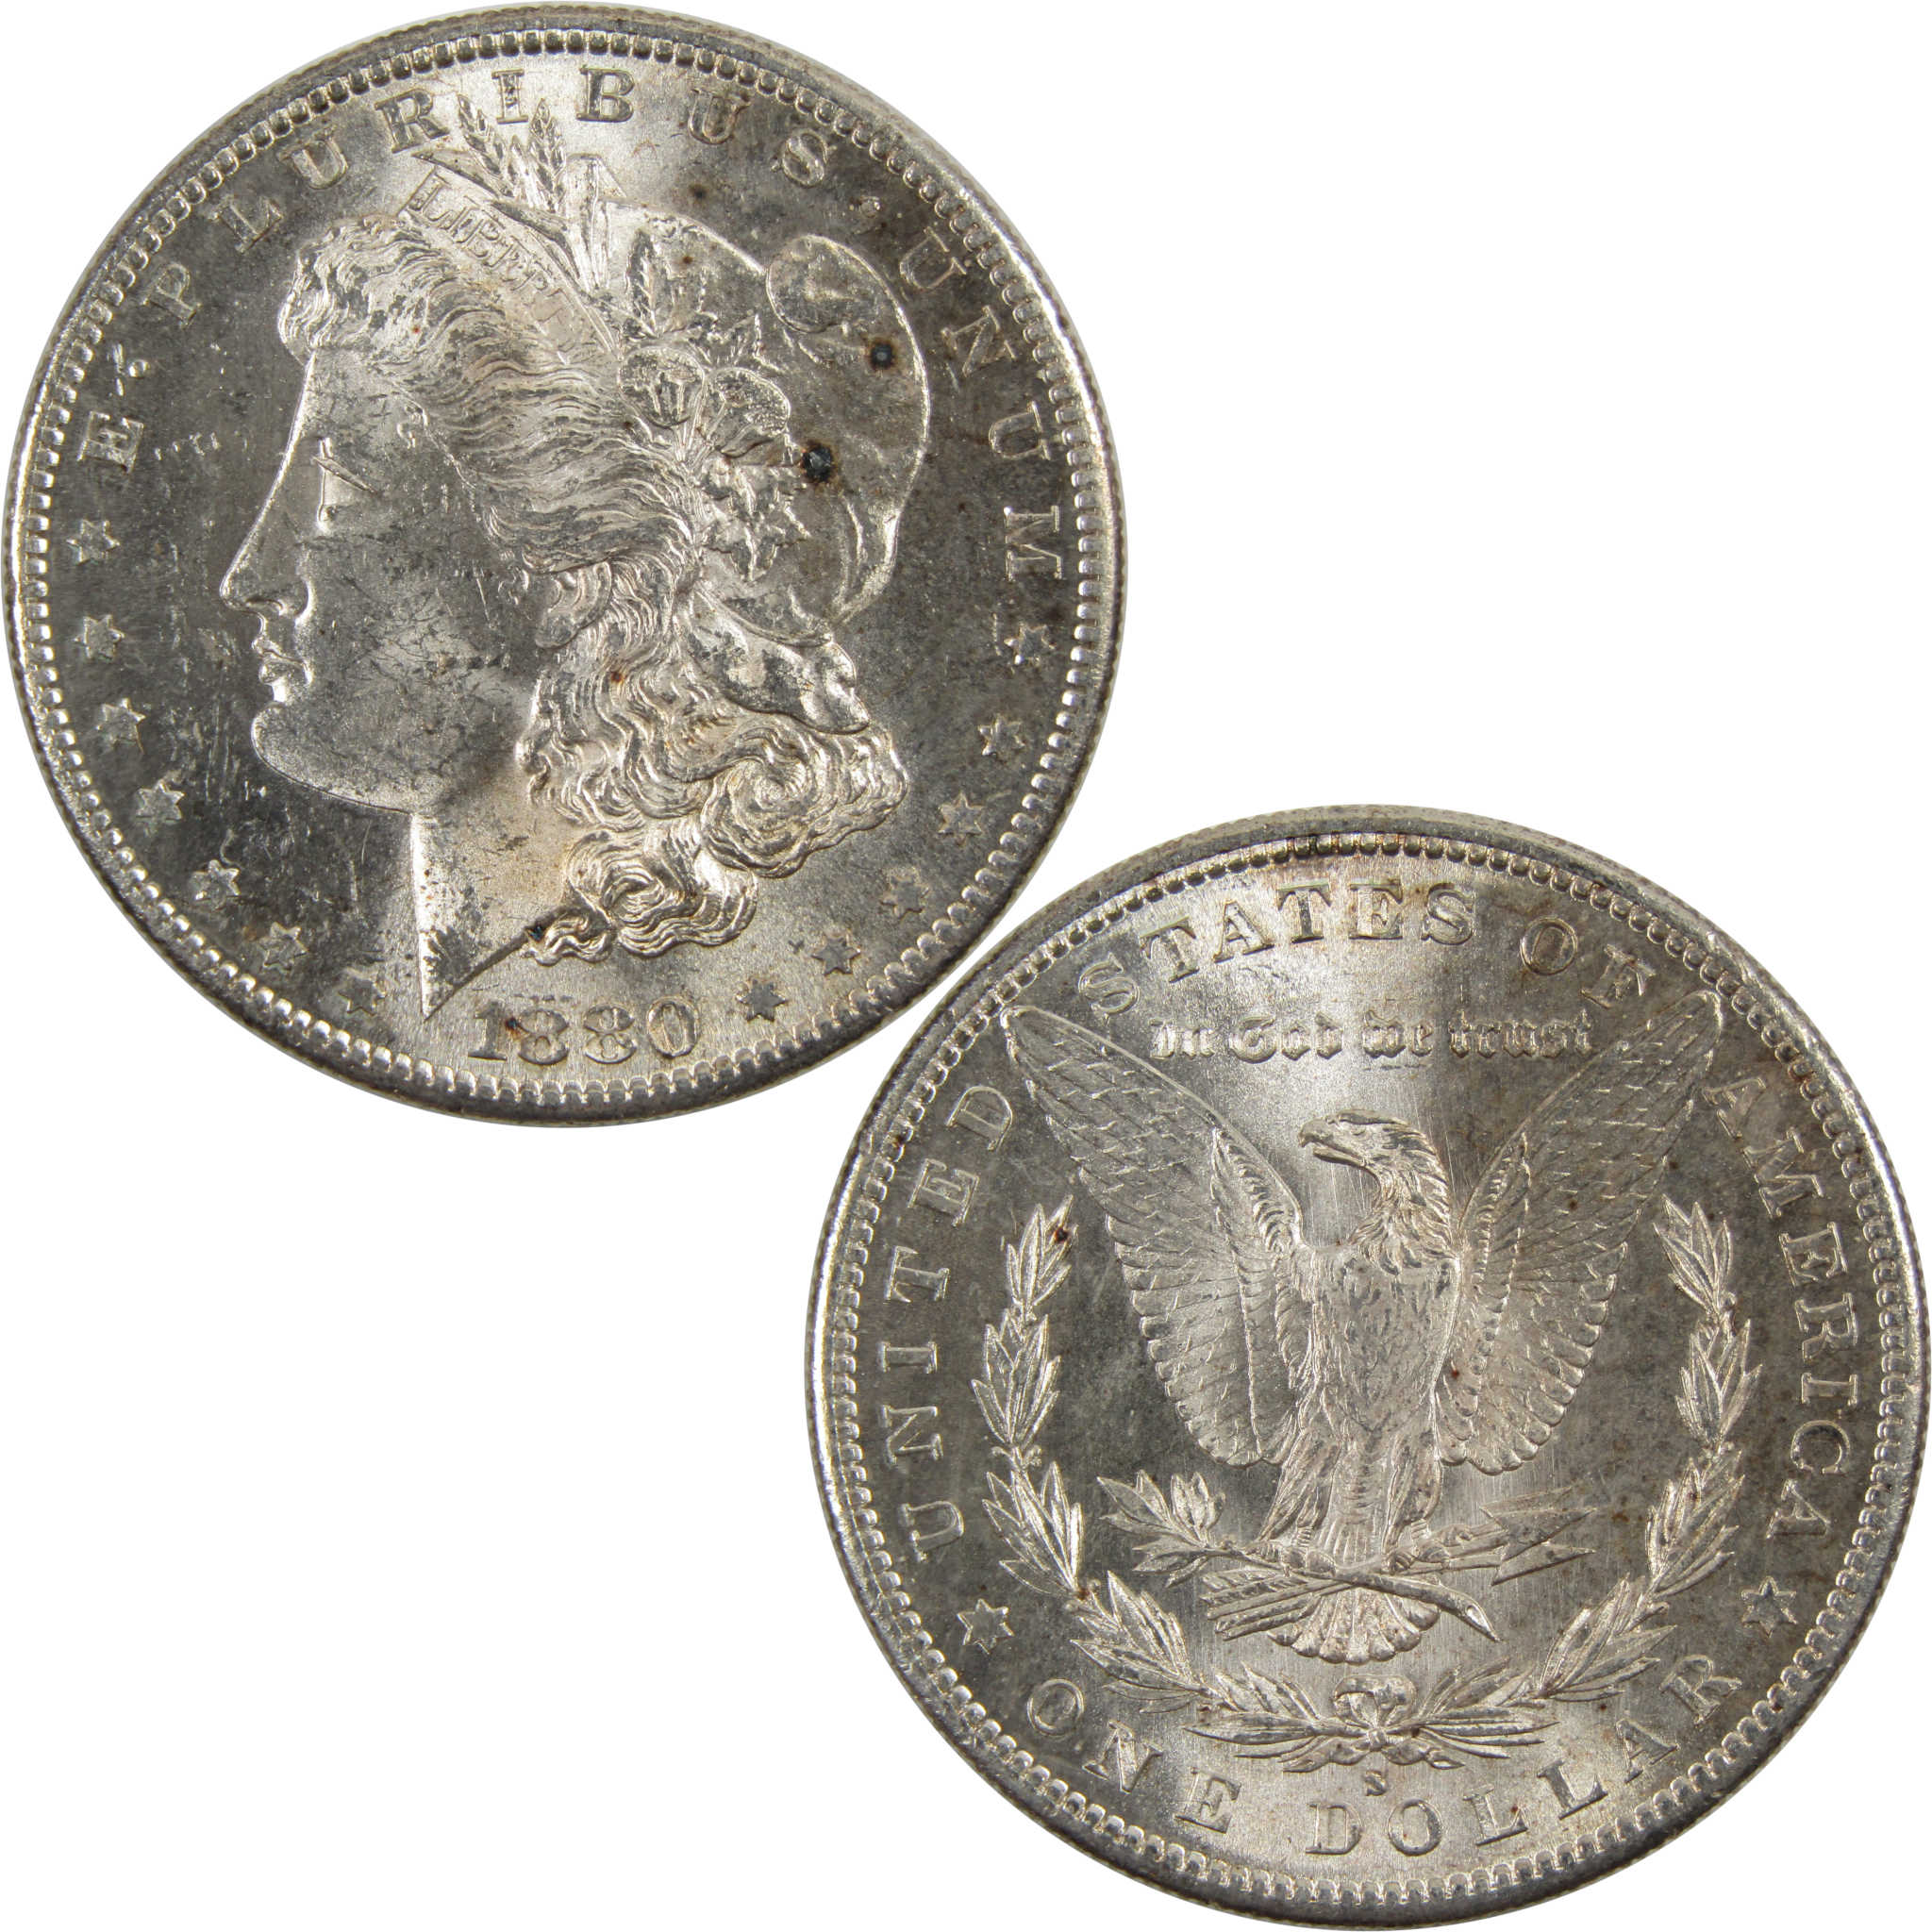 1880 S Morgan Dollar BU Uncirculated 90% Silver $1 Coin SKU:I8236 - Morgan coin - Morgan silver dollar - Morgan silver dollar for sale - Profile Coins &amp; Collectibles